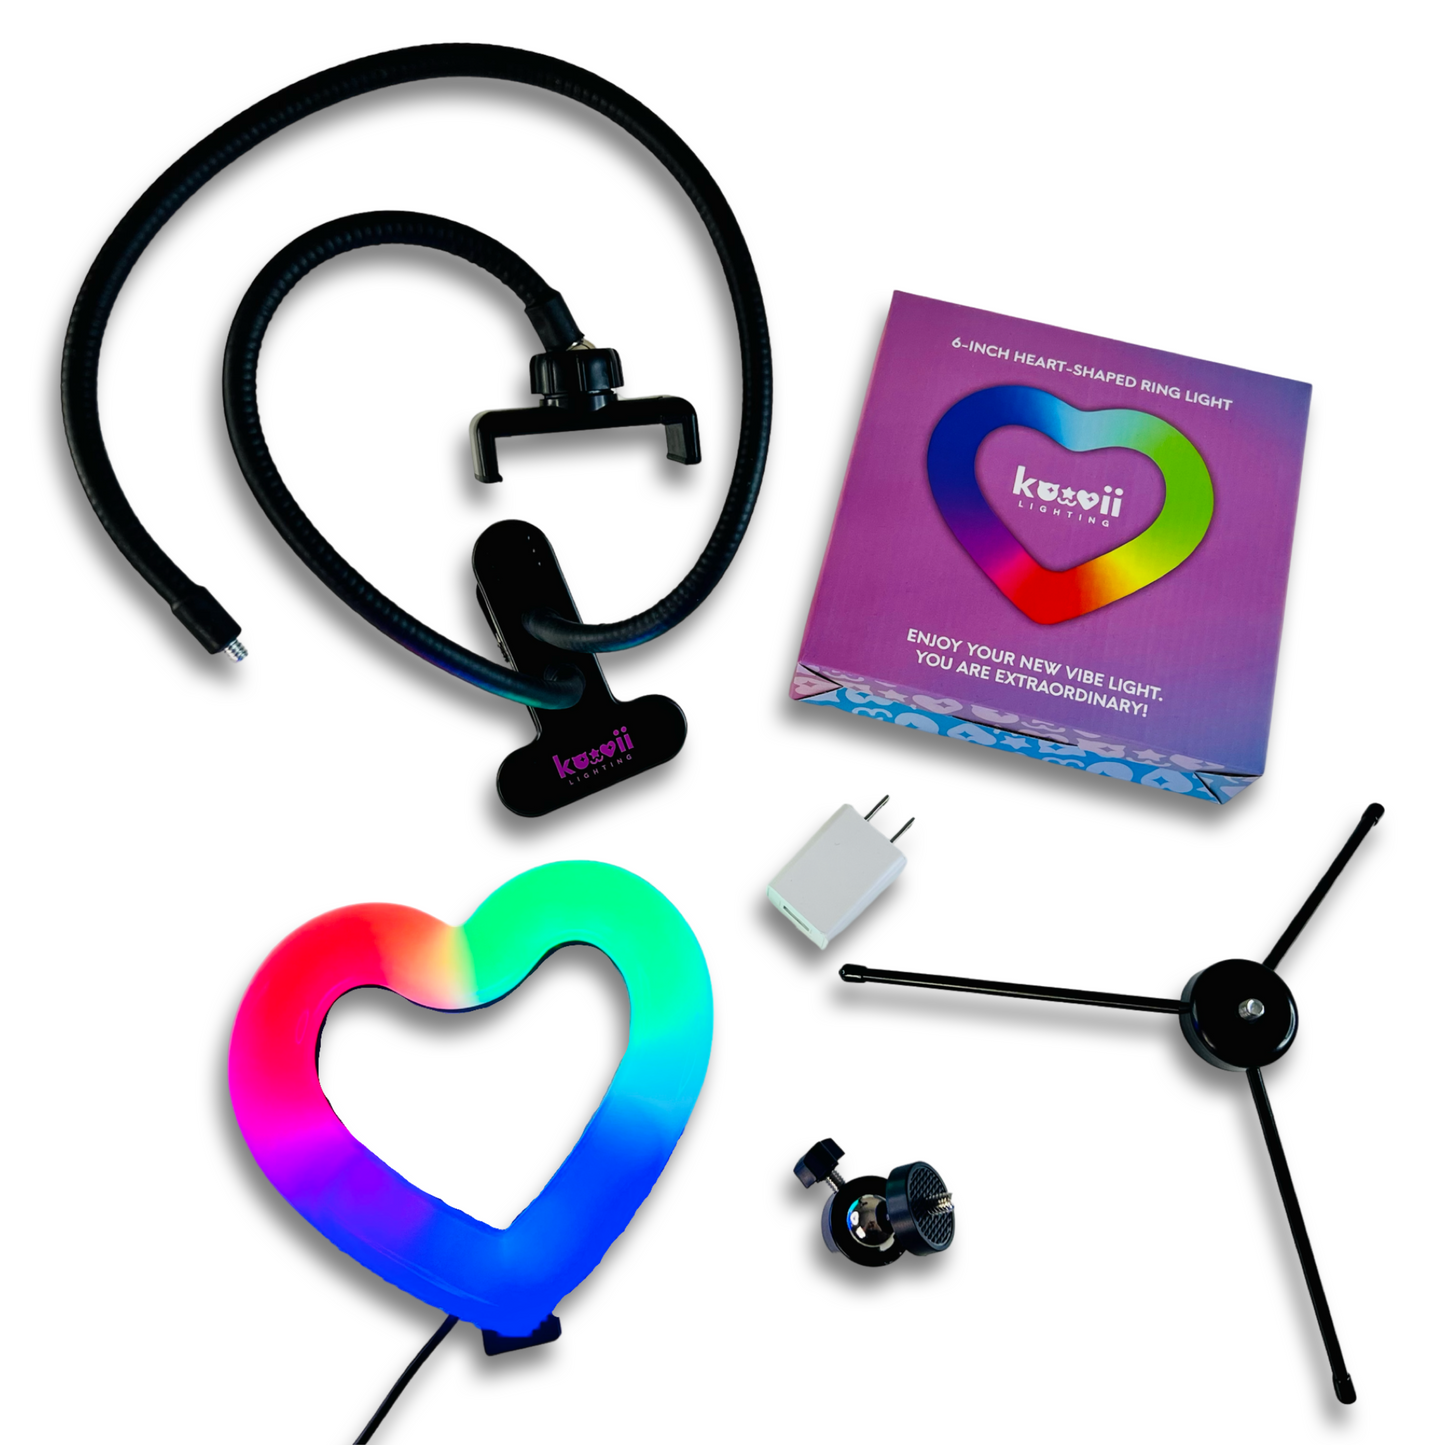 Kawaii Lighting Creator Kit - 6" Heart Shaped Ring Light with Phone Holder and Desk Clamp and Baby Tripod with Swivel Ball Head and USB Wall Plug.